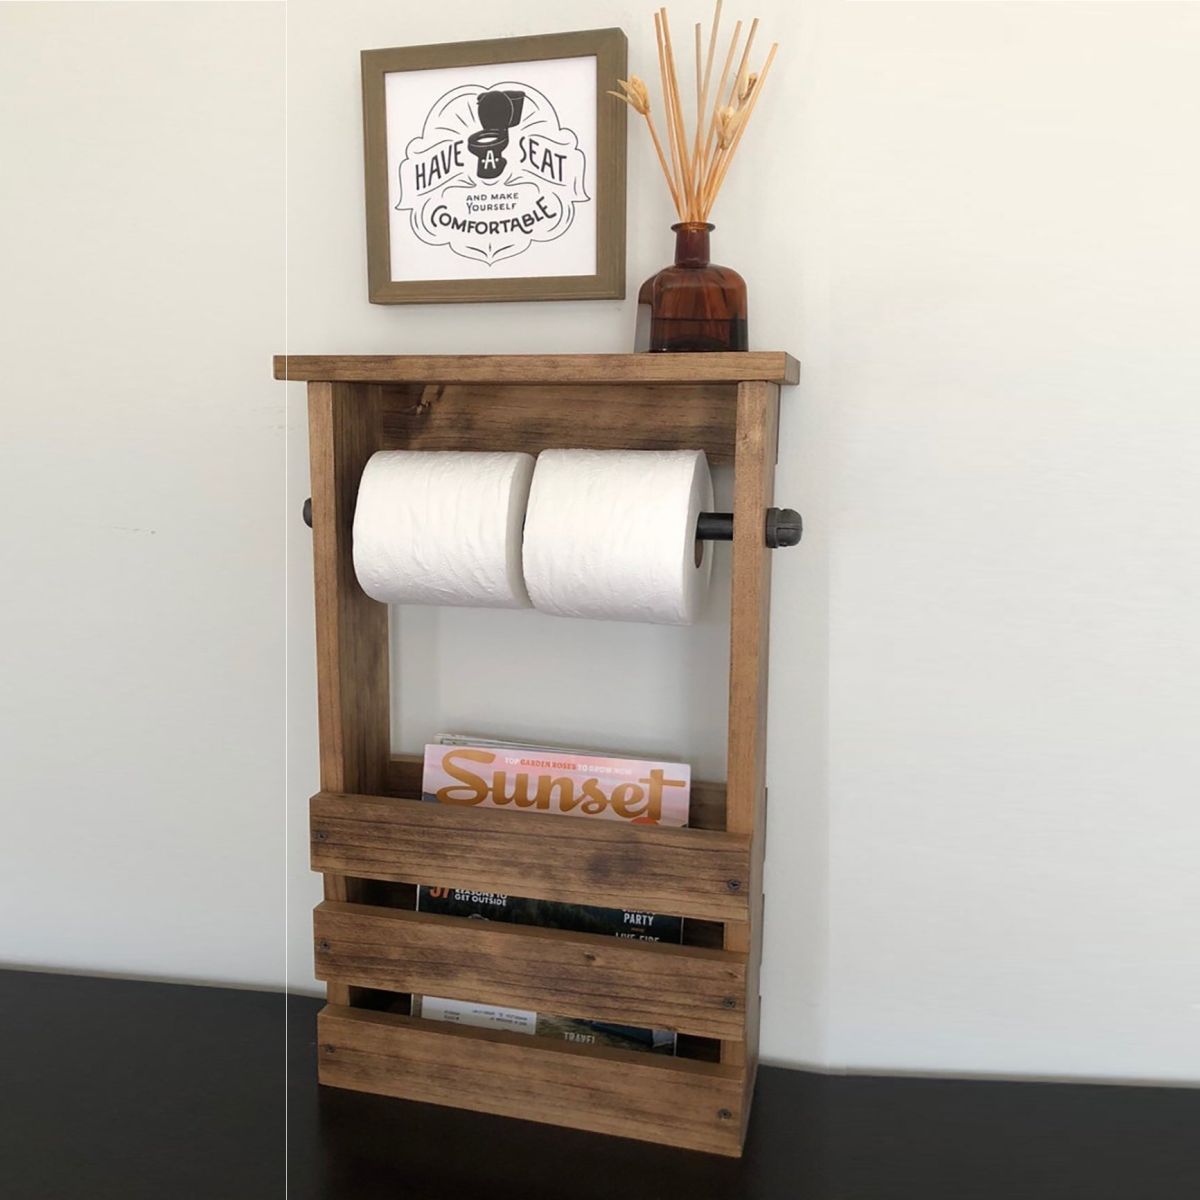 Stand suport toaleta,seria wood,homs,lemn natur,700034